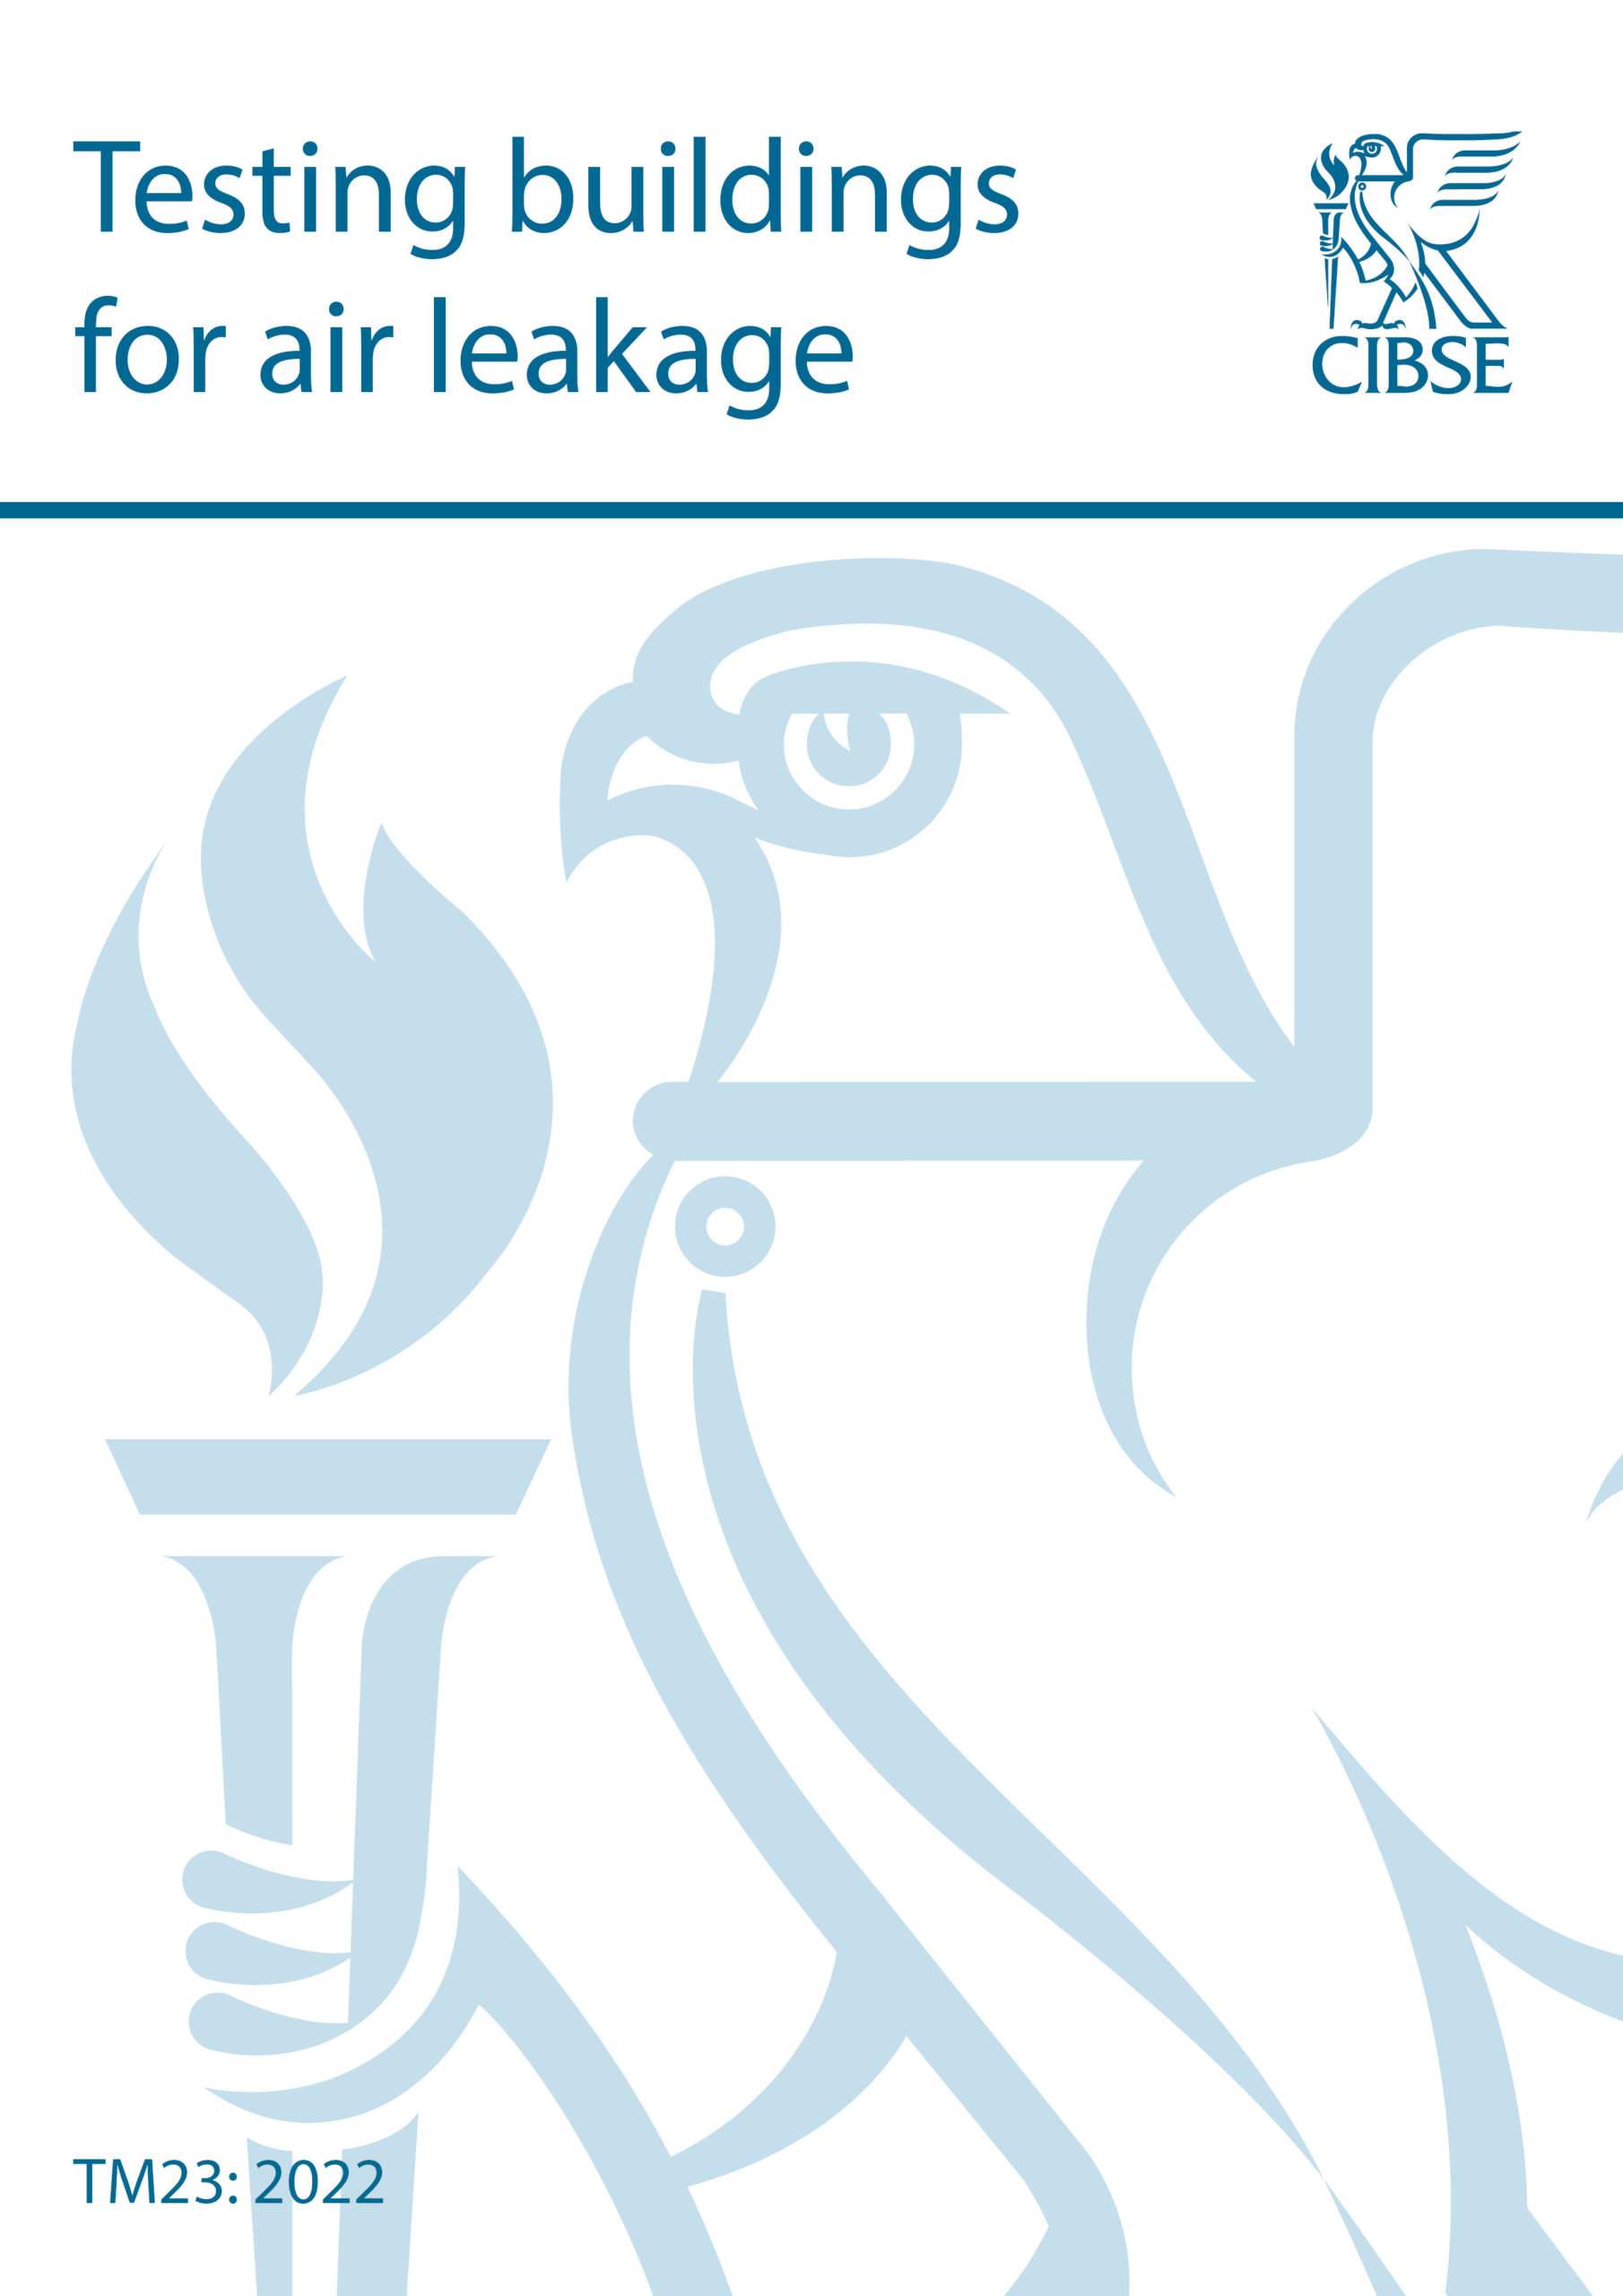 CIBSE updates air leakage testing guidance